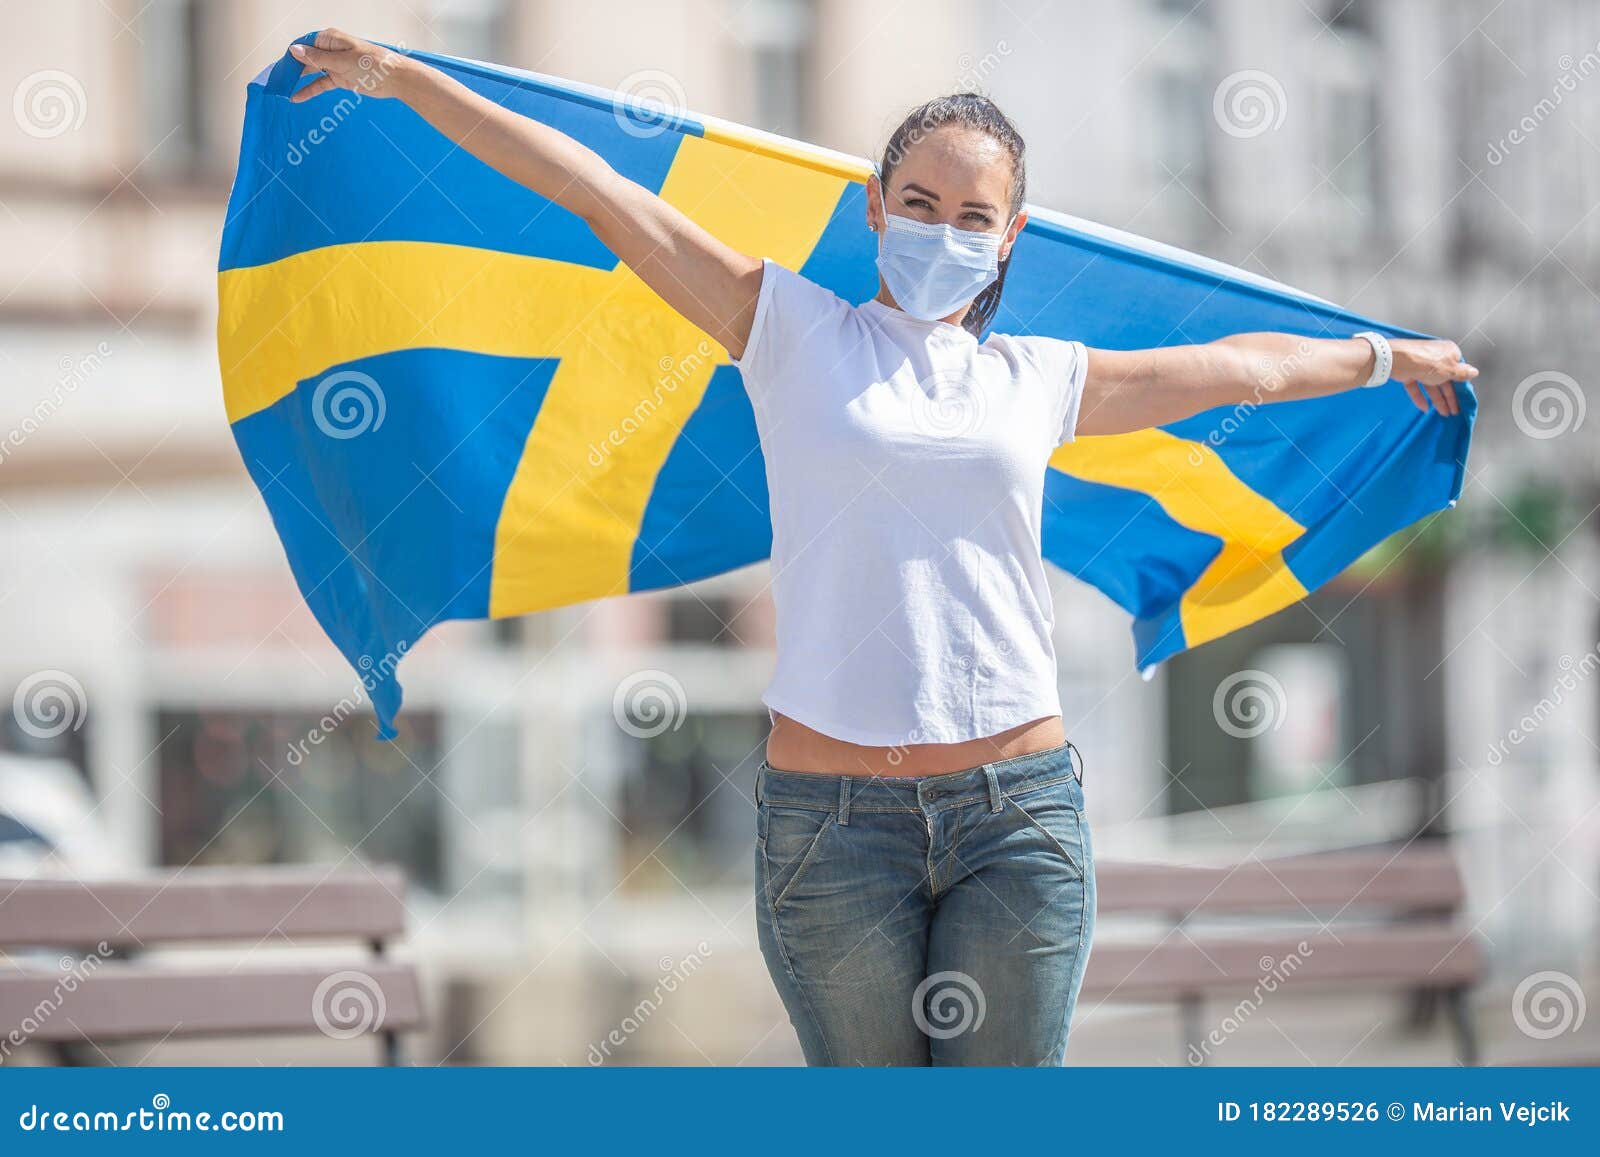 Swedish women